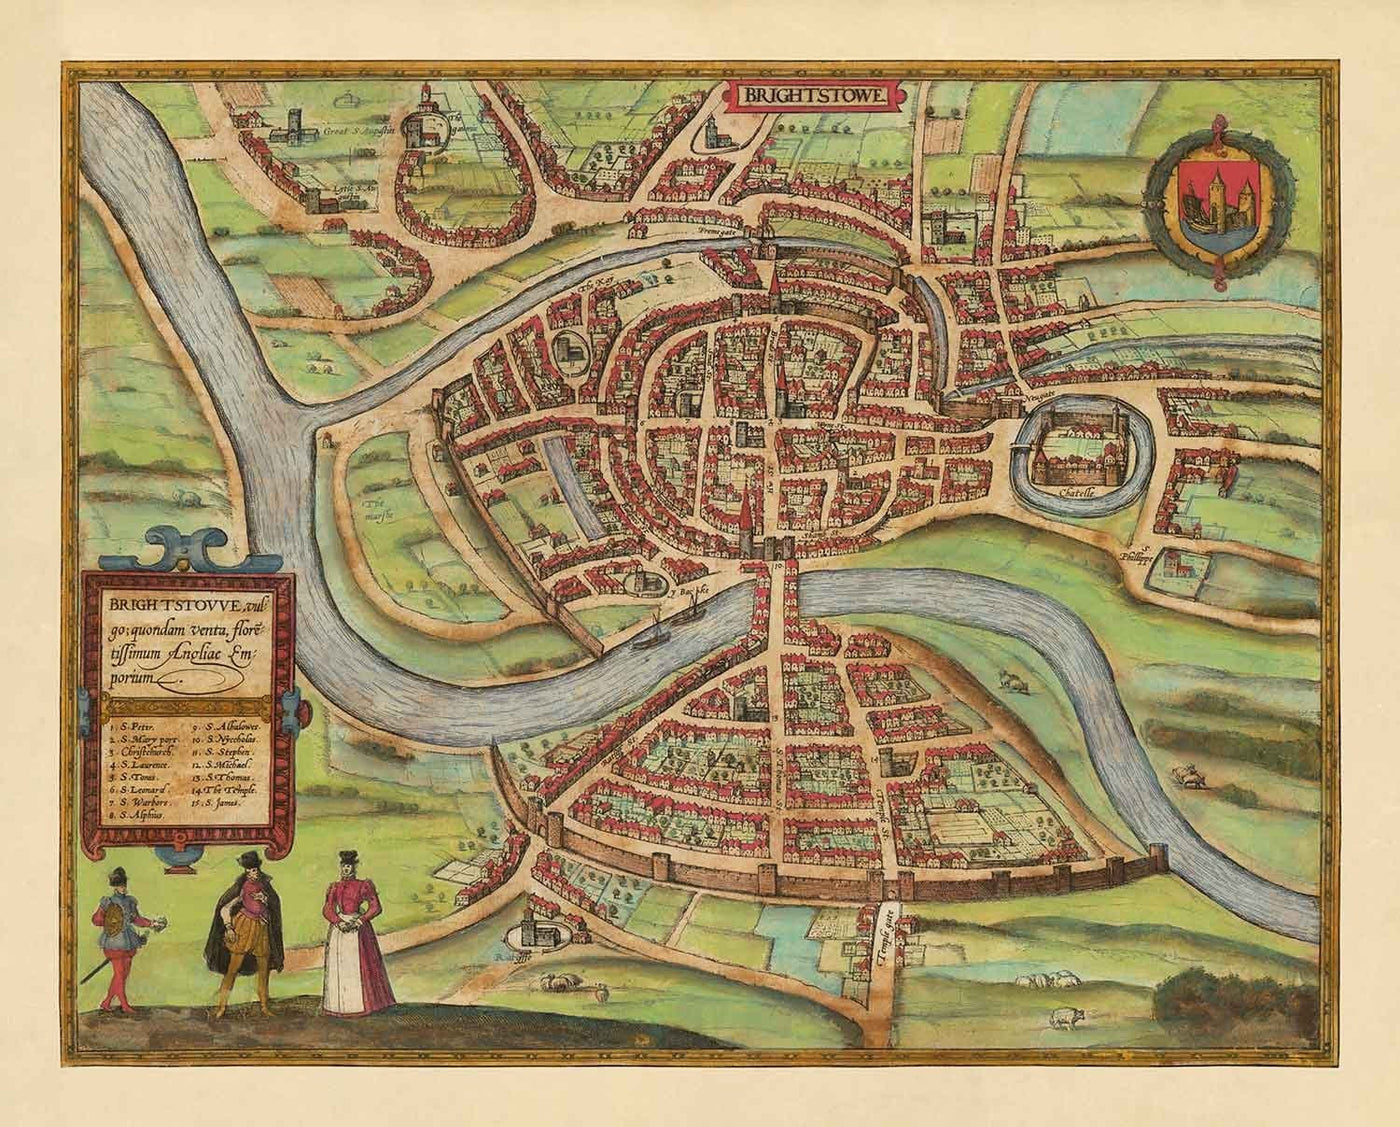 Old Map of Bristol, 1588 by Braun - Brightstowe, Avon, St Nicholas, Newgate, Coat of Arms